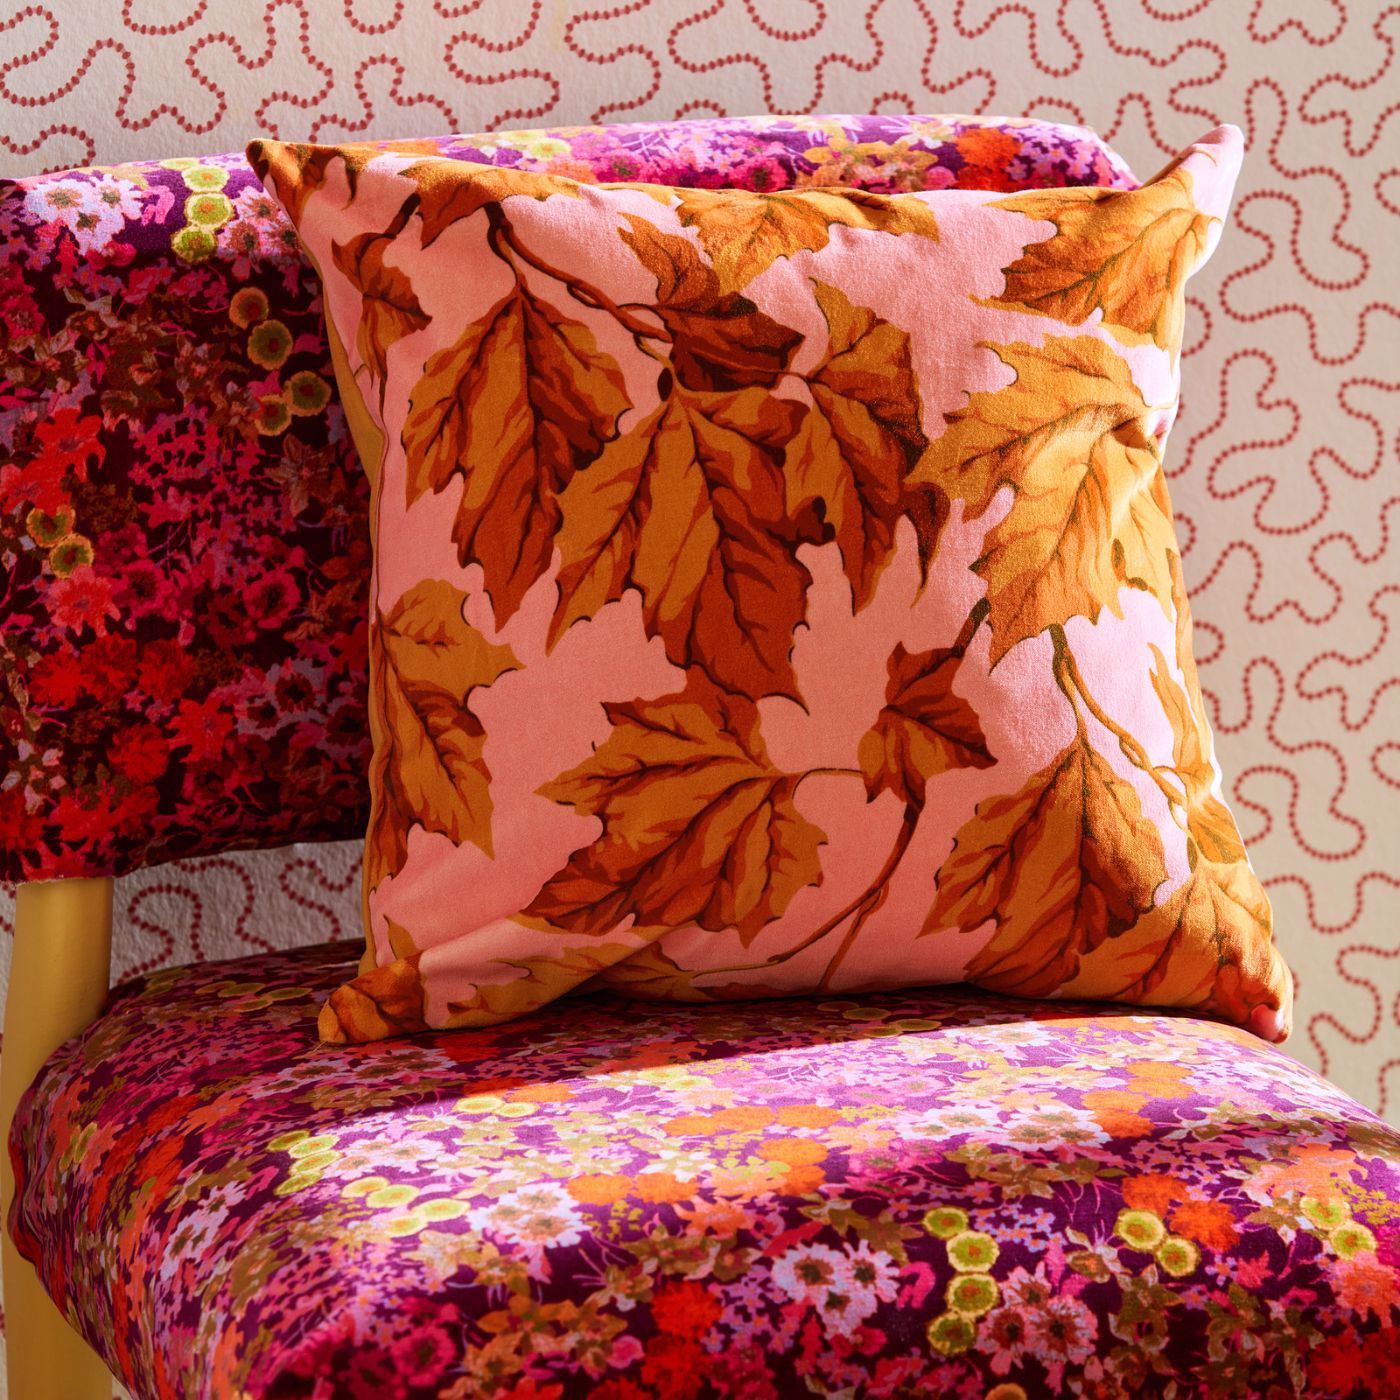 Dappled Leaf Amber/Rose Fabric by HAR